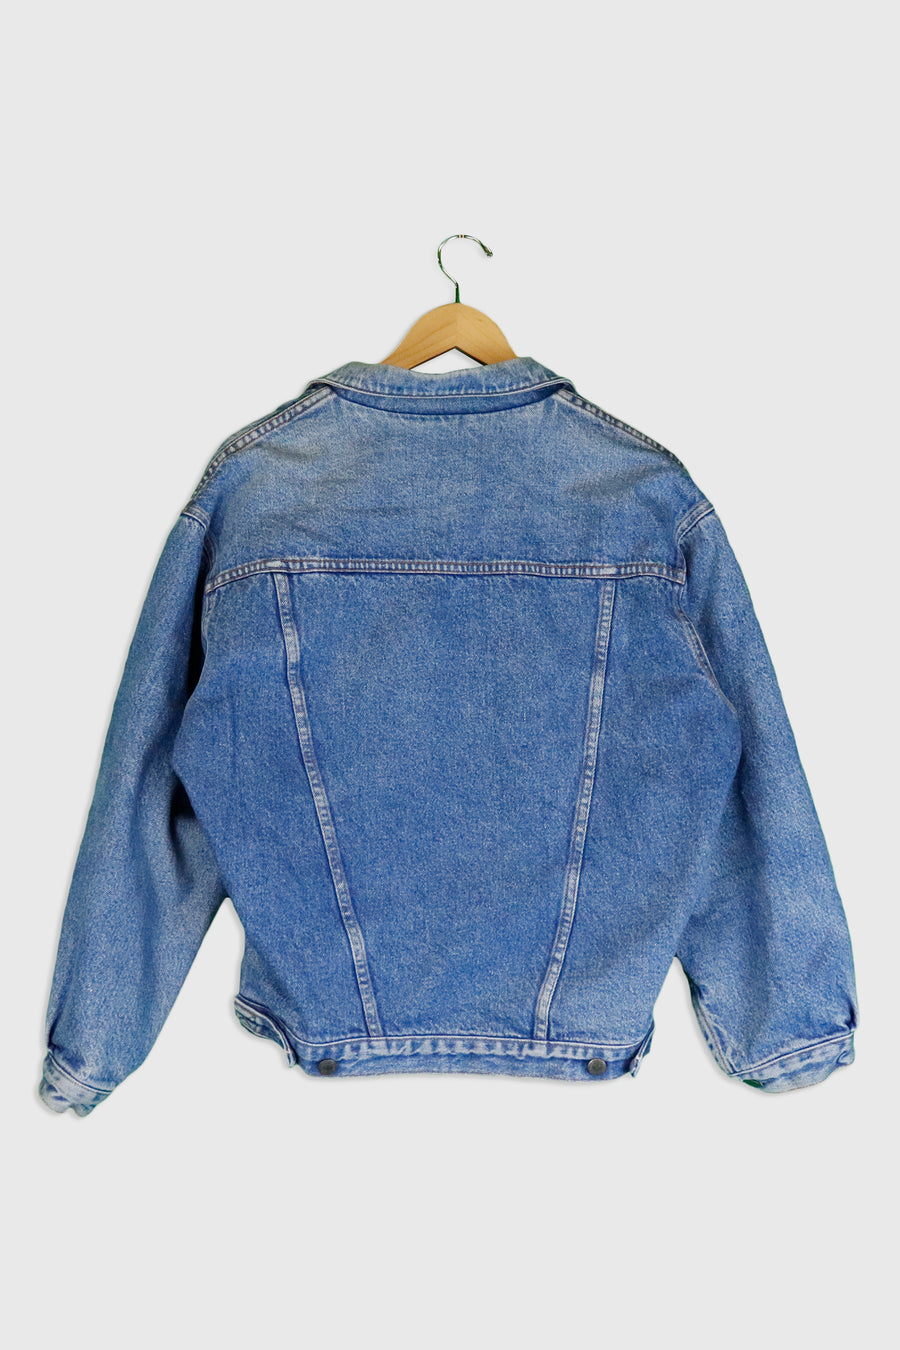 Vintage GAP Denim Flannel Lined Jacket Sz XS